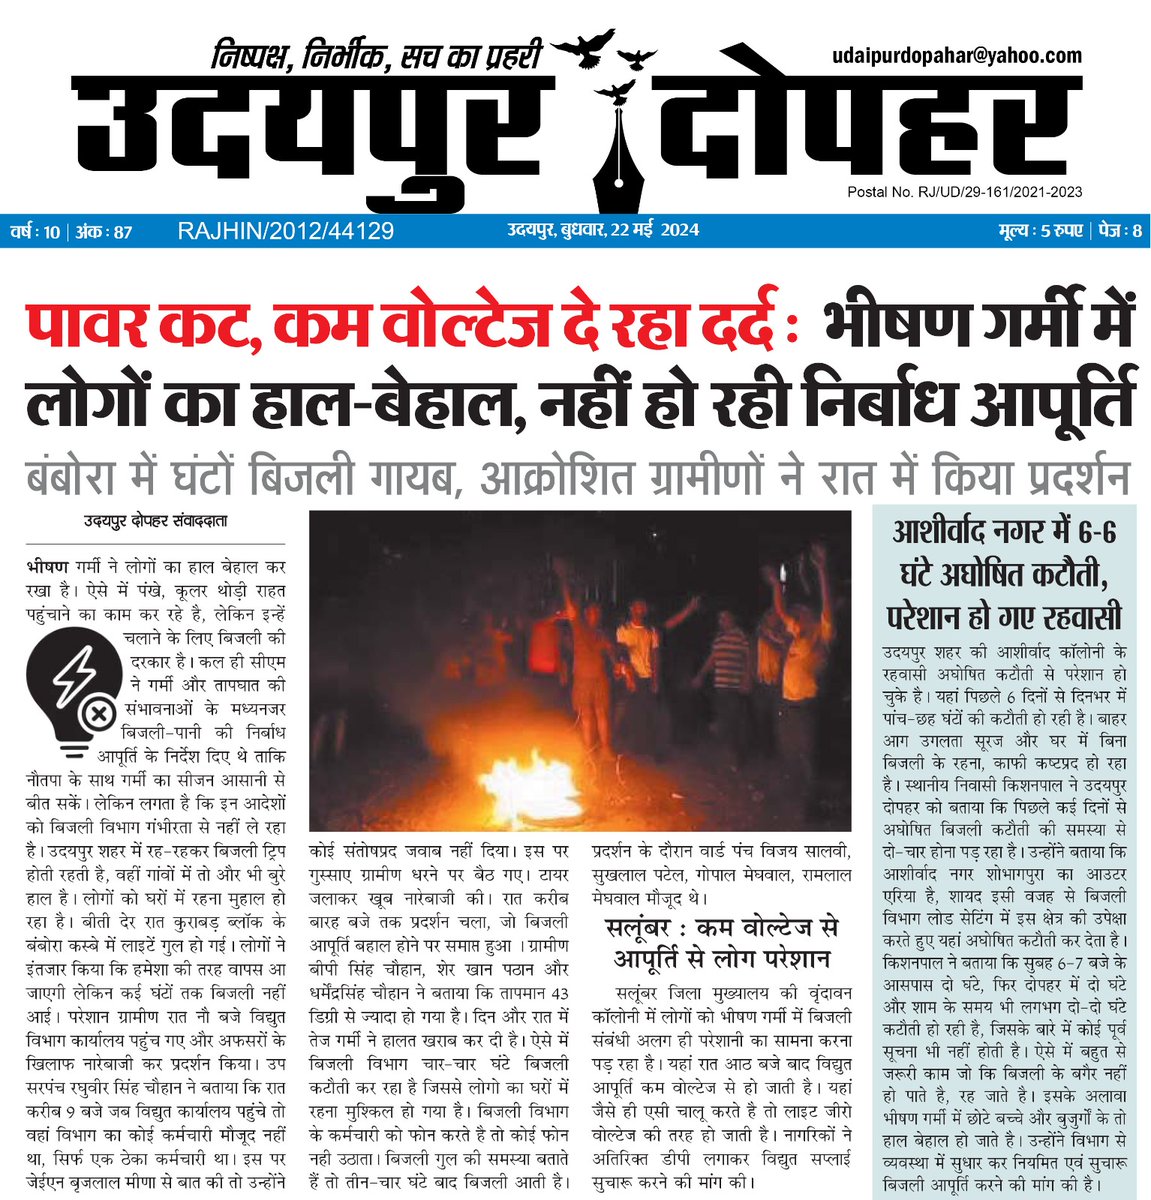 #उदयपुर की #प्रमुख #खबरें #उदयपुरदोपहर #राजस्थान #News in #UdaipurDopahar #rajasthan #powercut #electricity #board #avvnl #city #village #alike #people #frustration #heatwave #mismanagement #government #agency